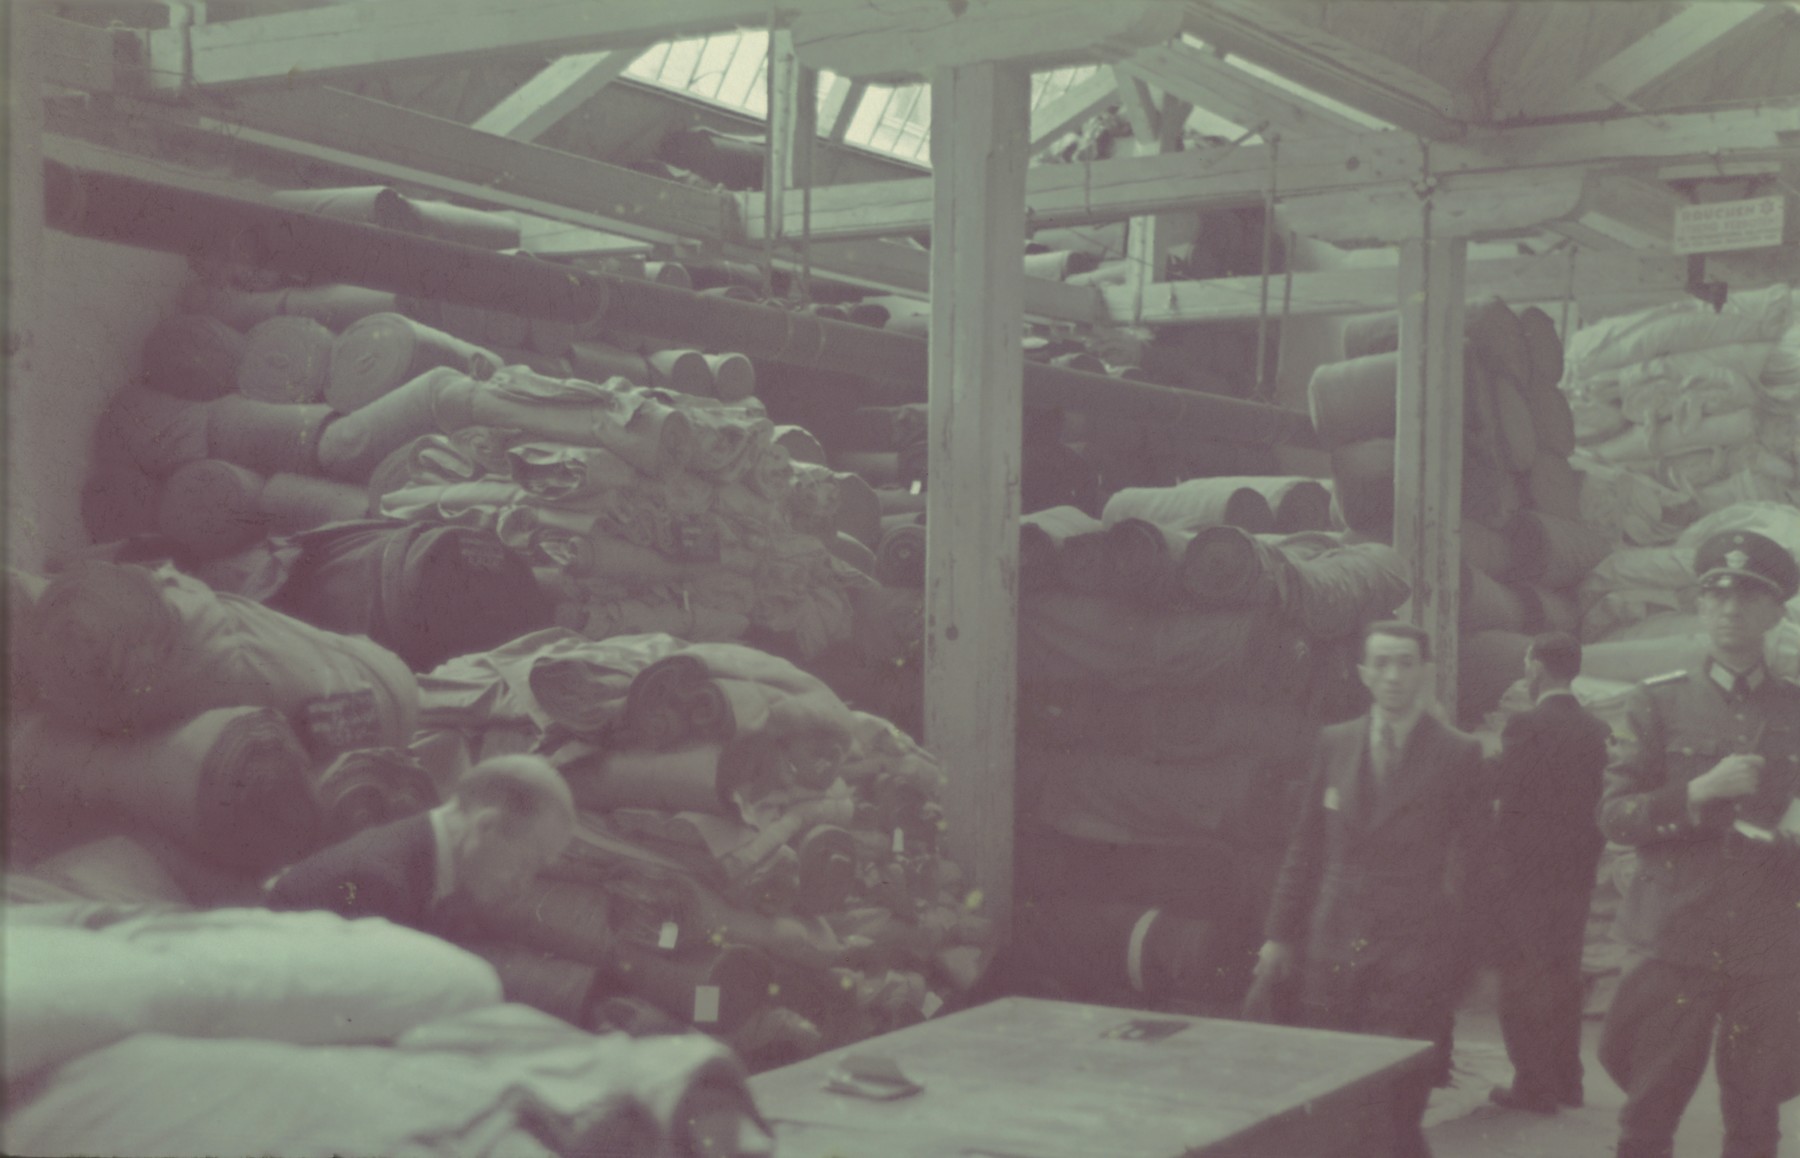 A German official inspects the textile storeroom in the Lodz ghetto.

Original German caption: "Getto, Litzmannstadt, Lager fur textilien" (textile warehouse), #194.